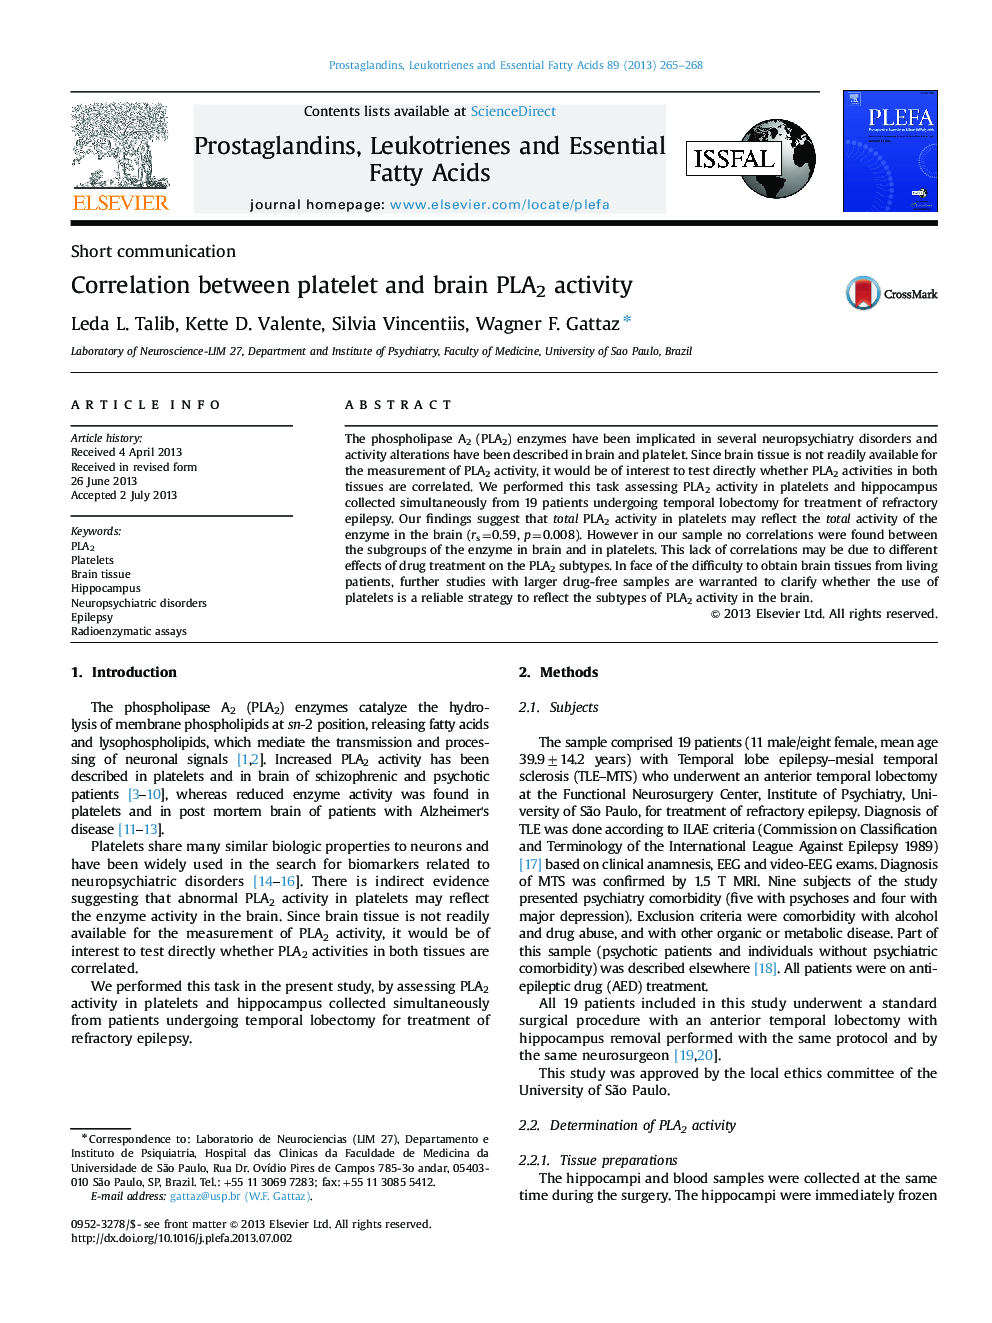 Correlation between platelet and brain PLA2 activity